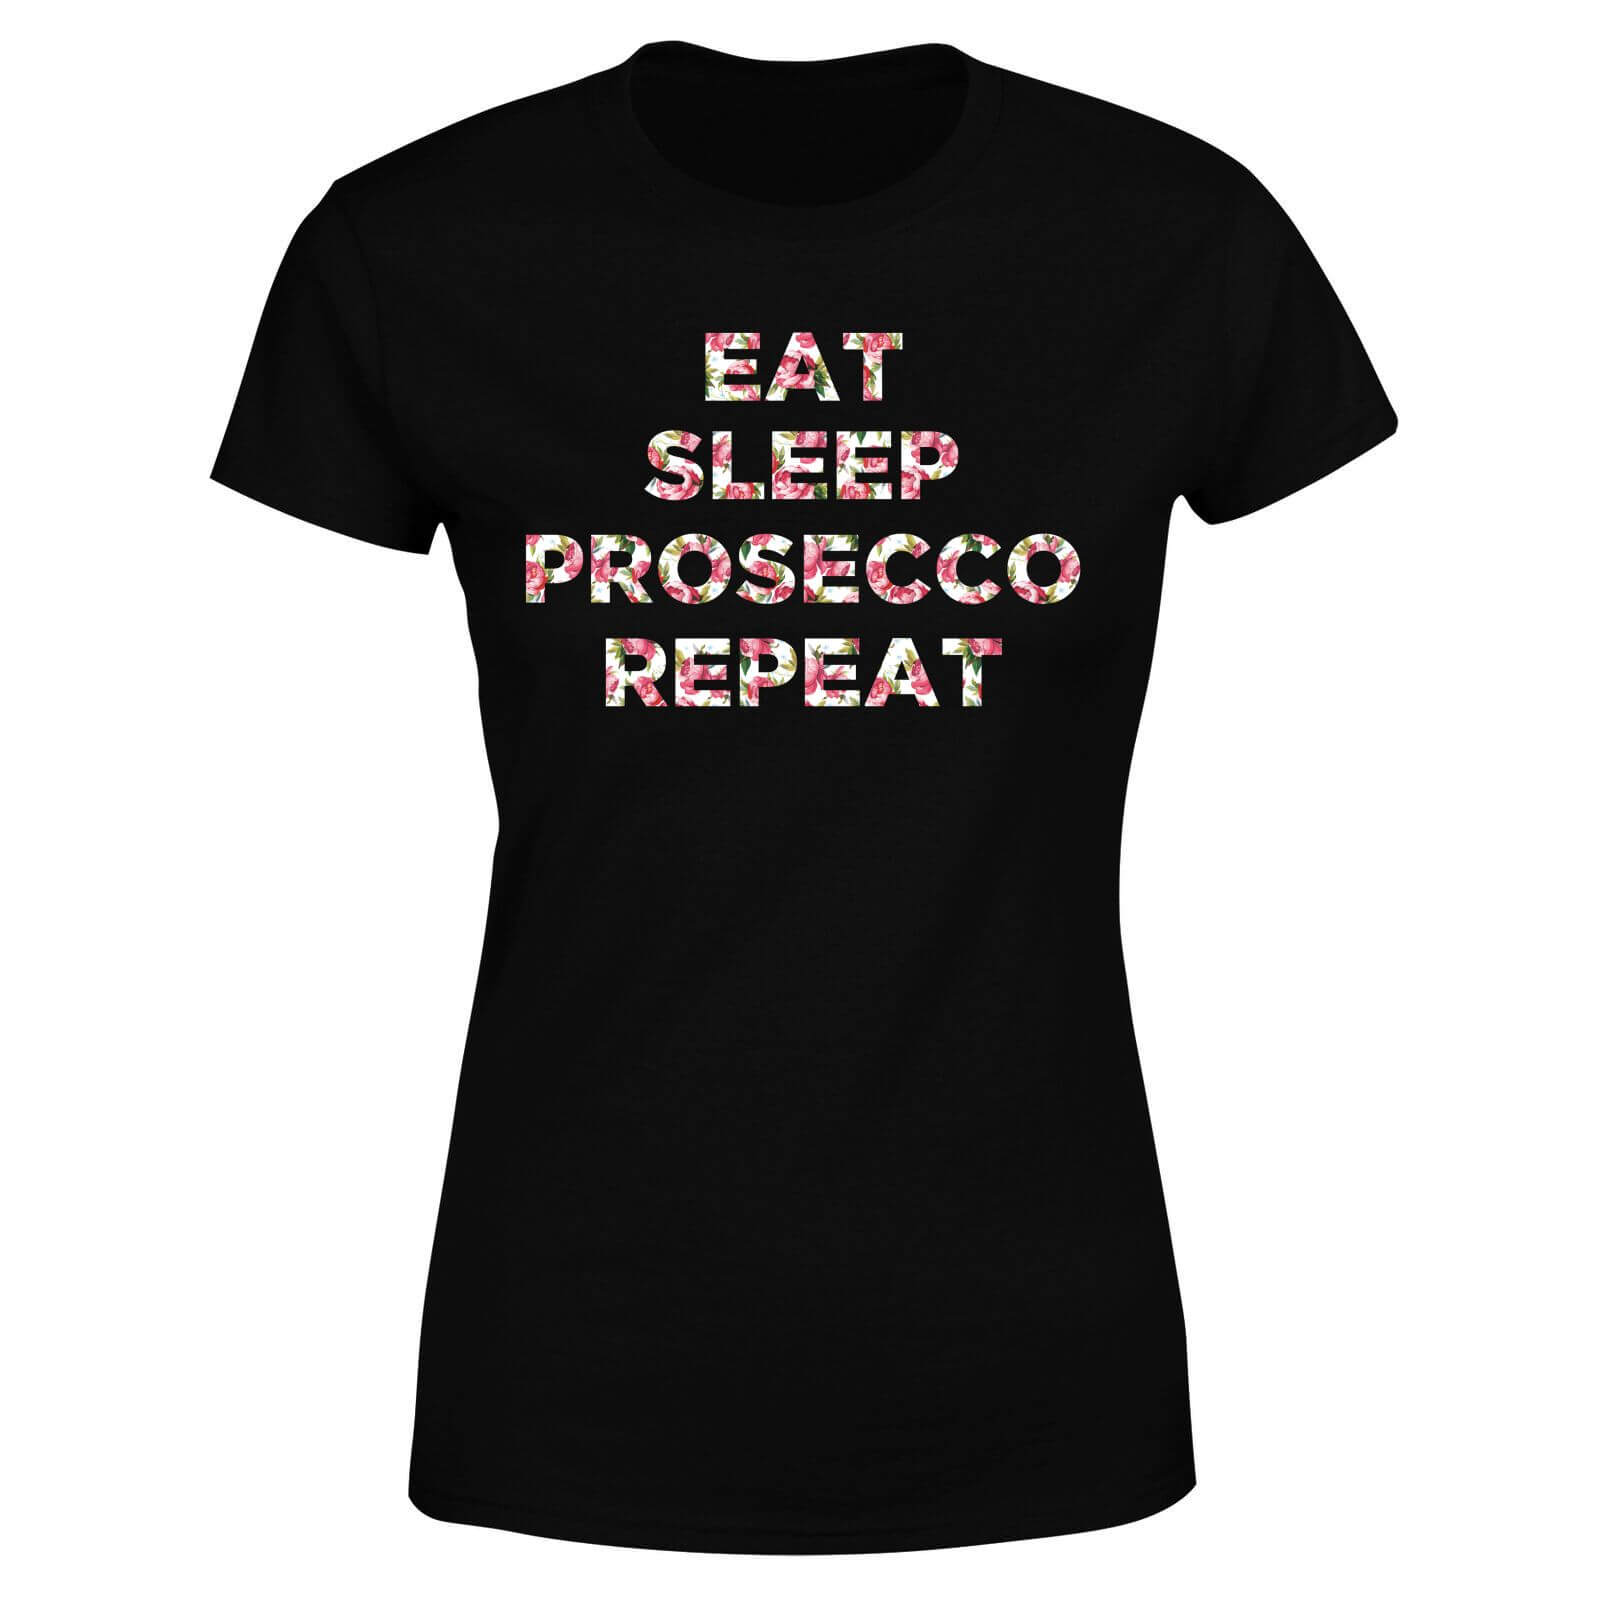 Eat Sleep Prosecco Repeat Women's T-Shirt - Black - S - Black